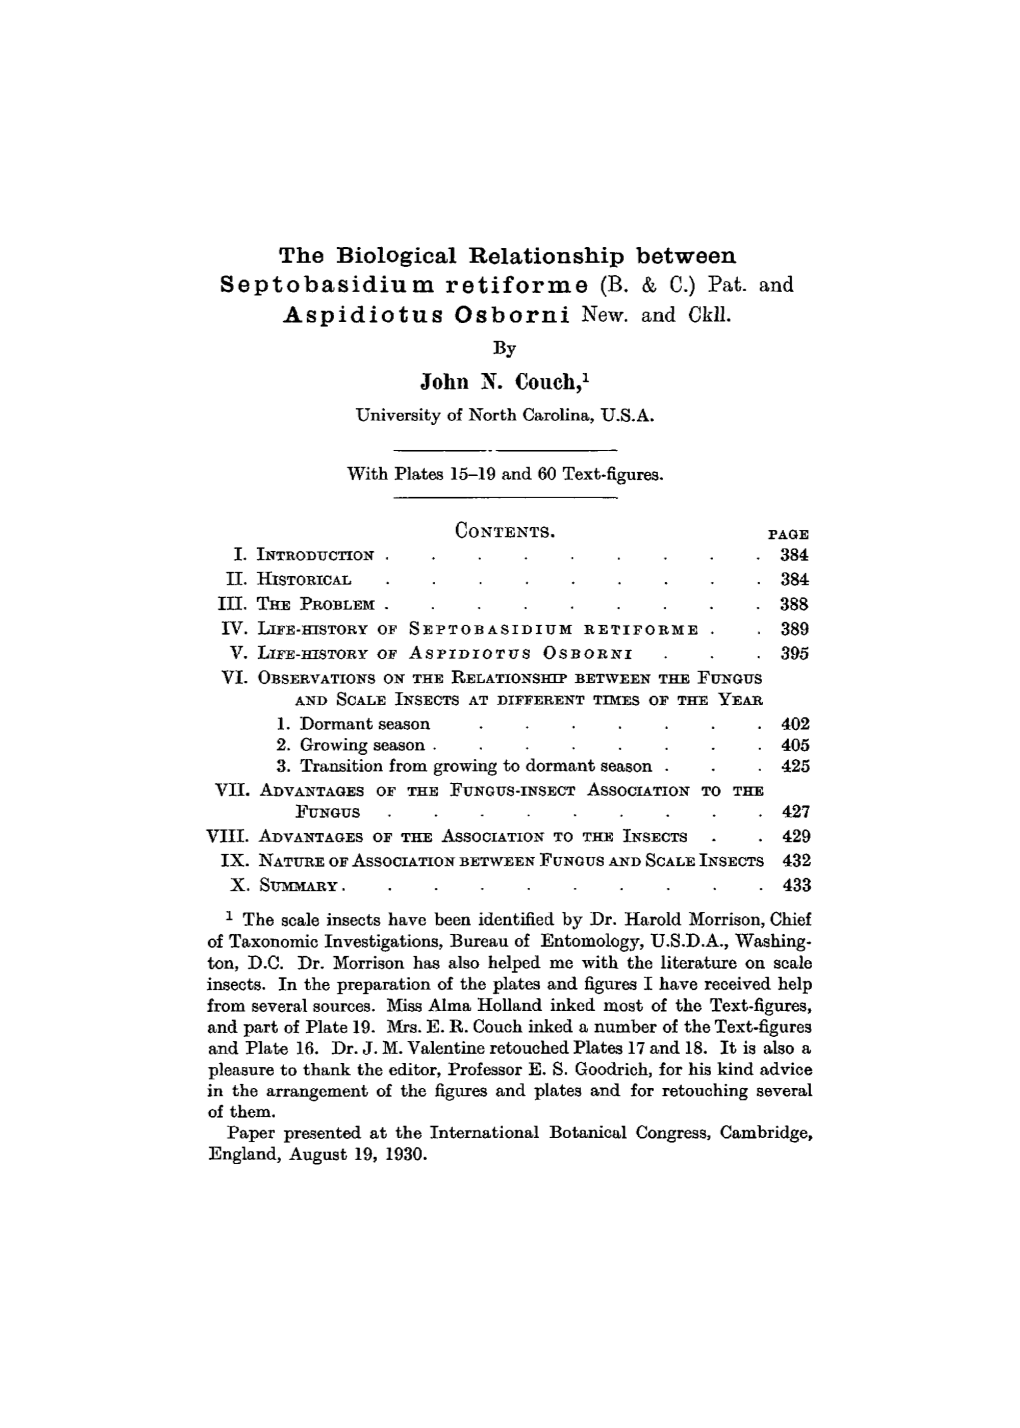 The Biological Relationship Between Septobasidium Retiforme (B. & C